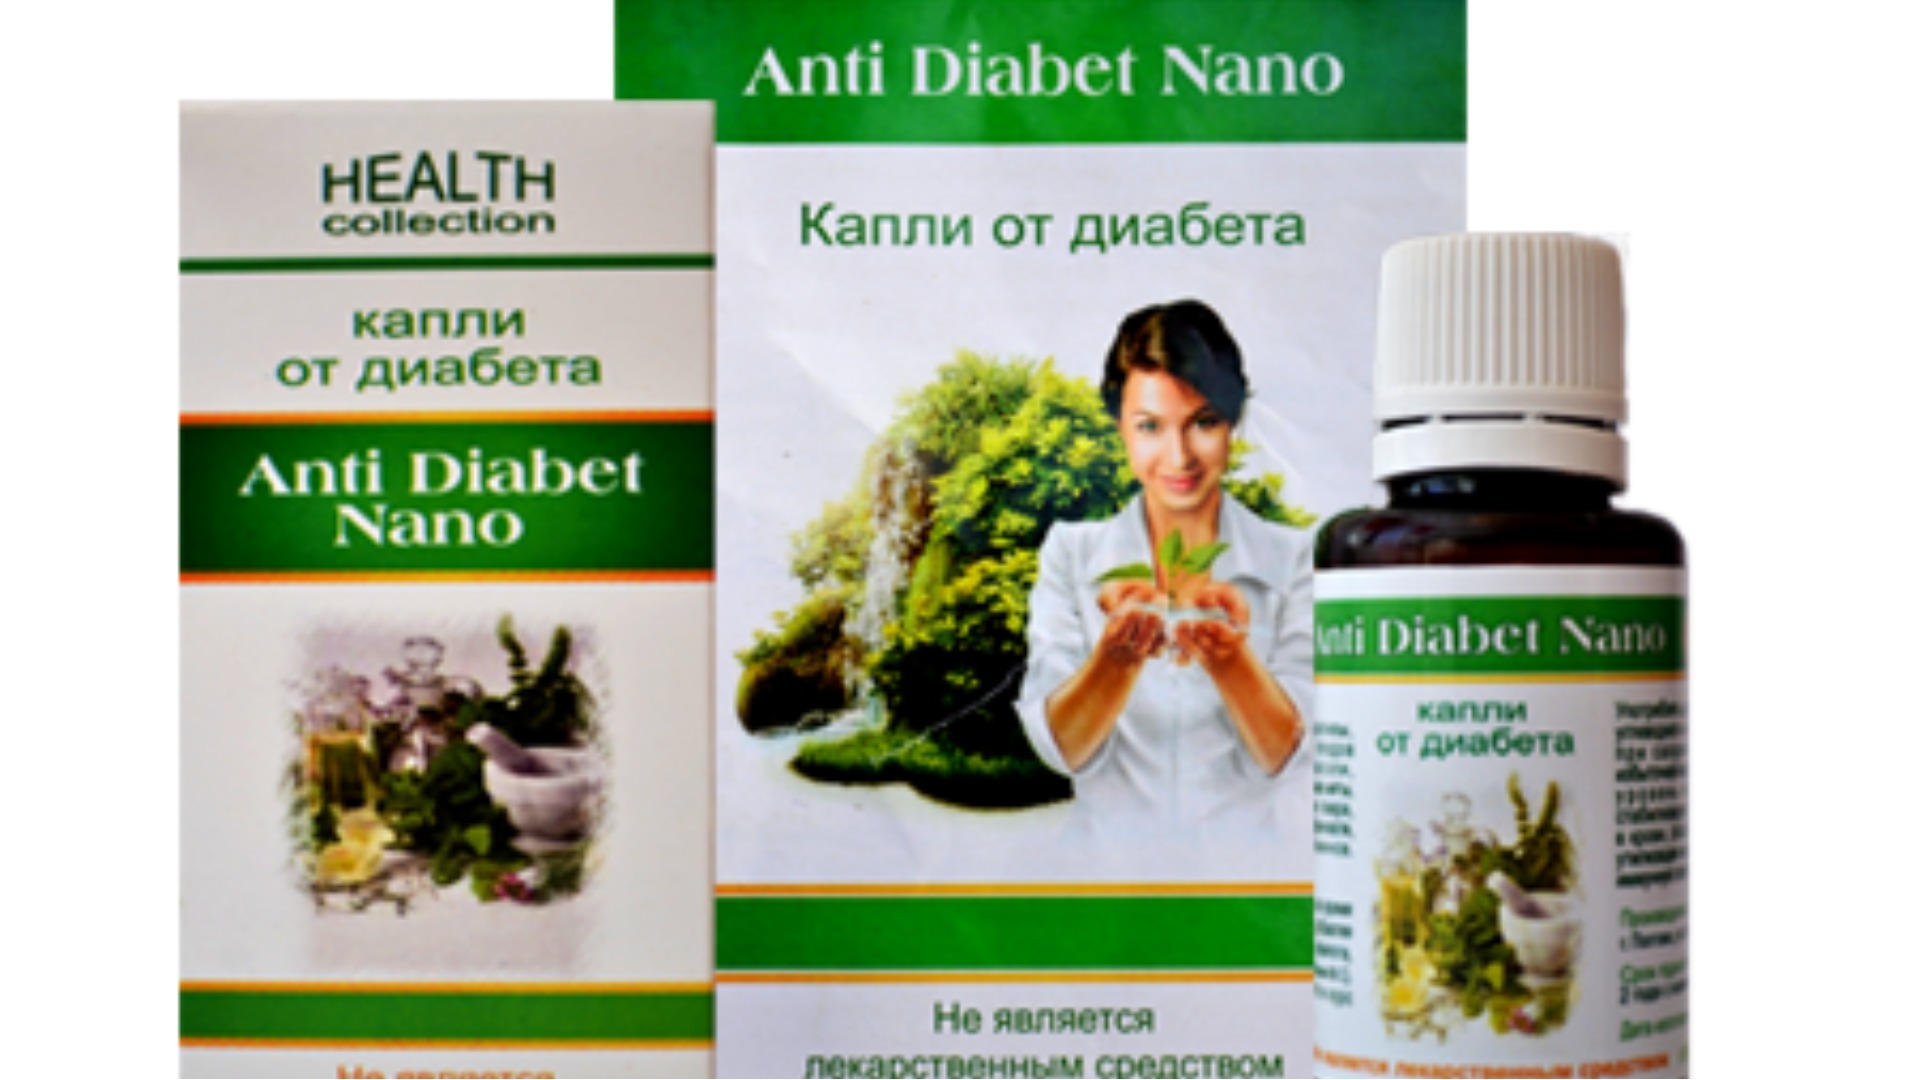 Anti Diabet Nano: обзор, преимущества и отзывы о товаре